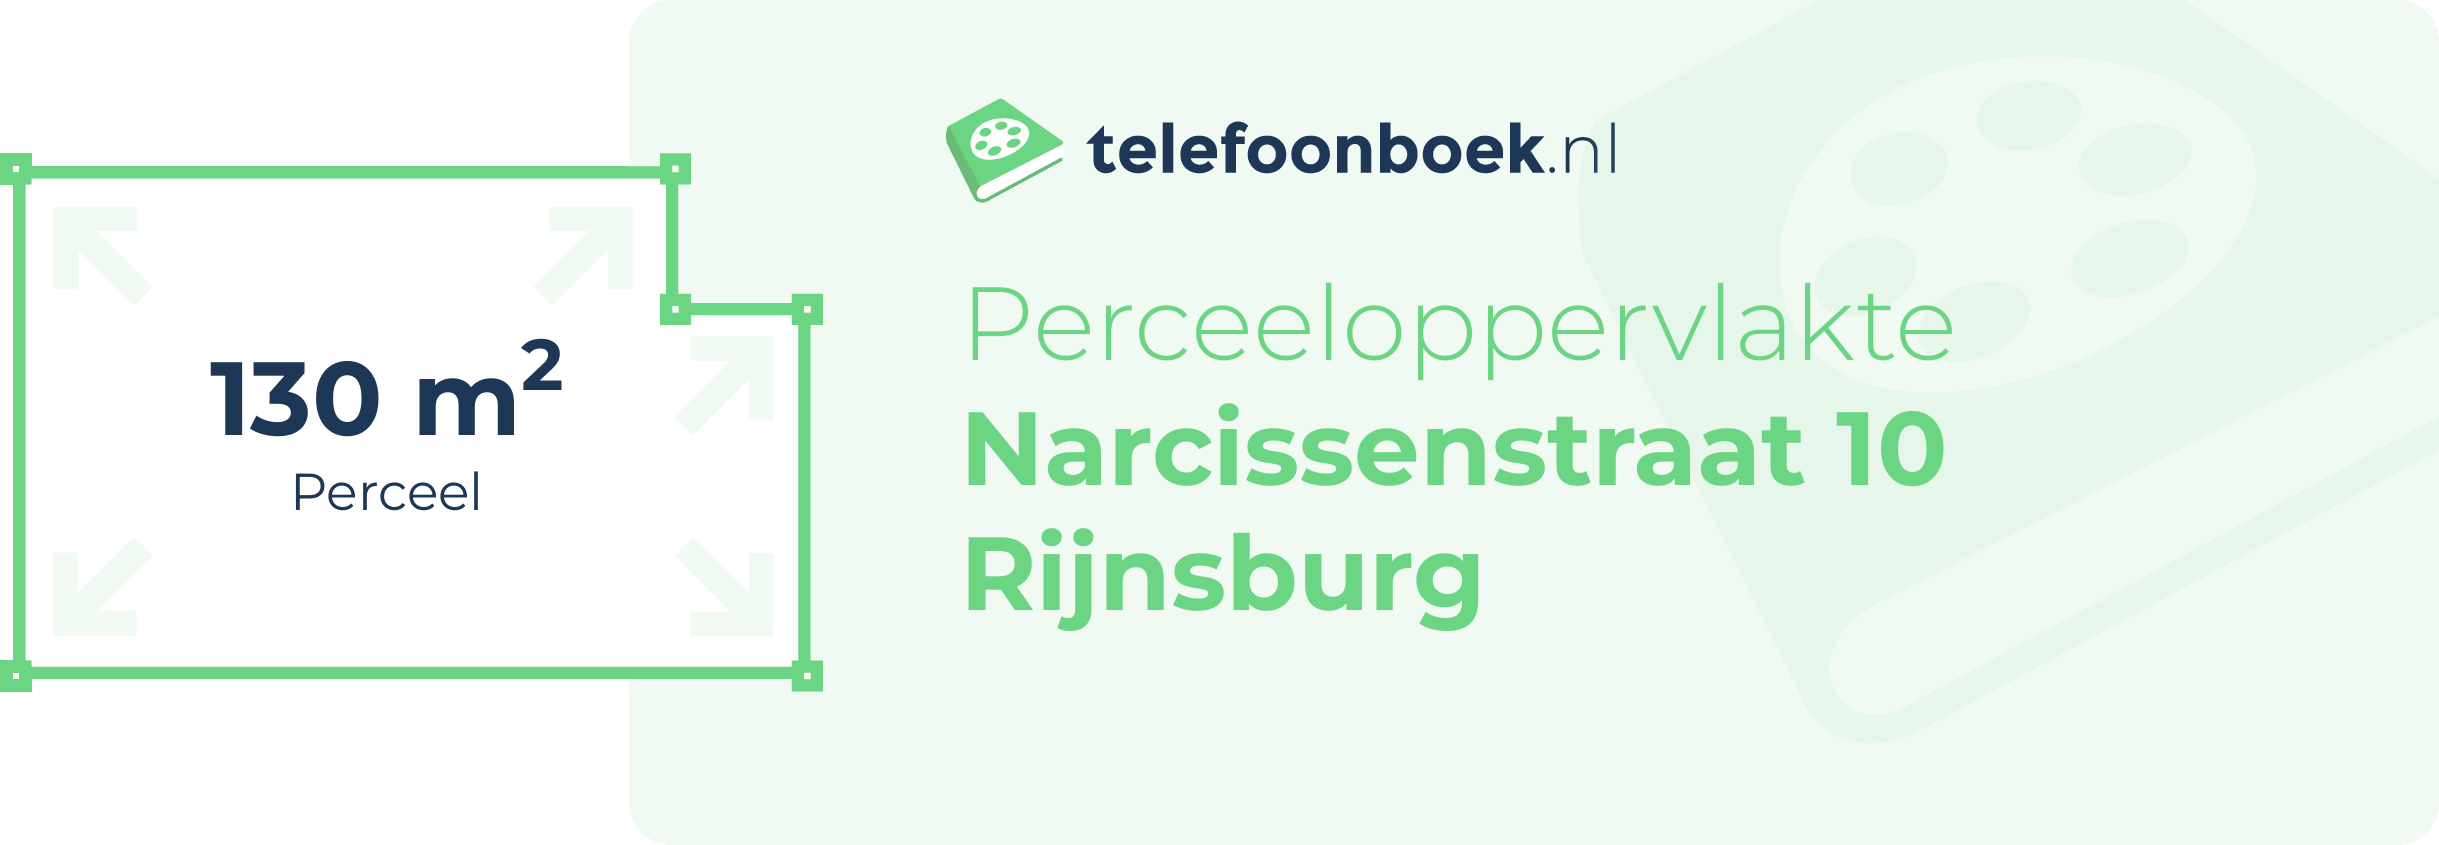 Perceeloppervlakte Narcissenstraat 10 Rijnsburg